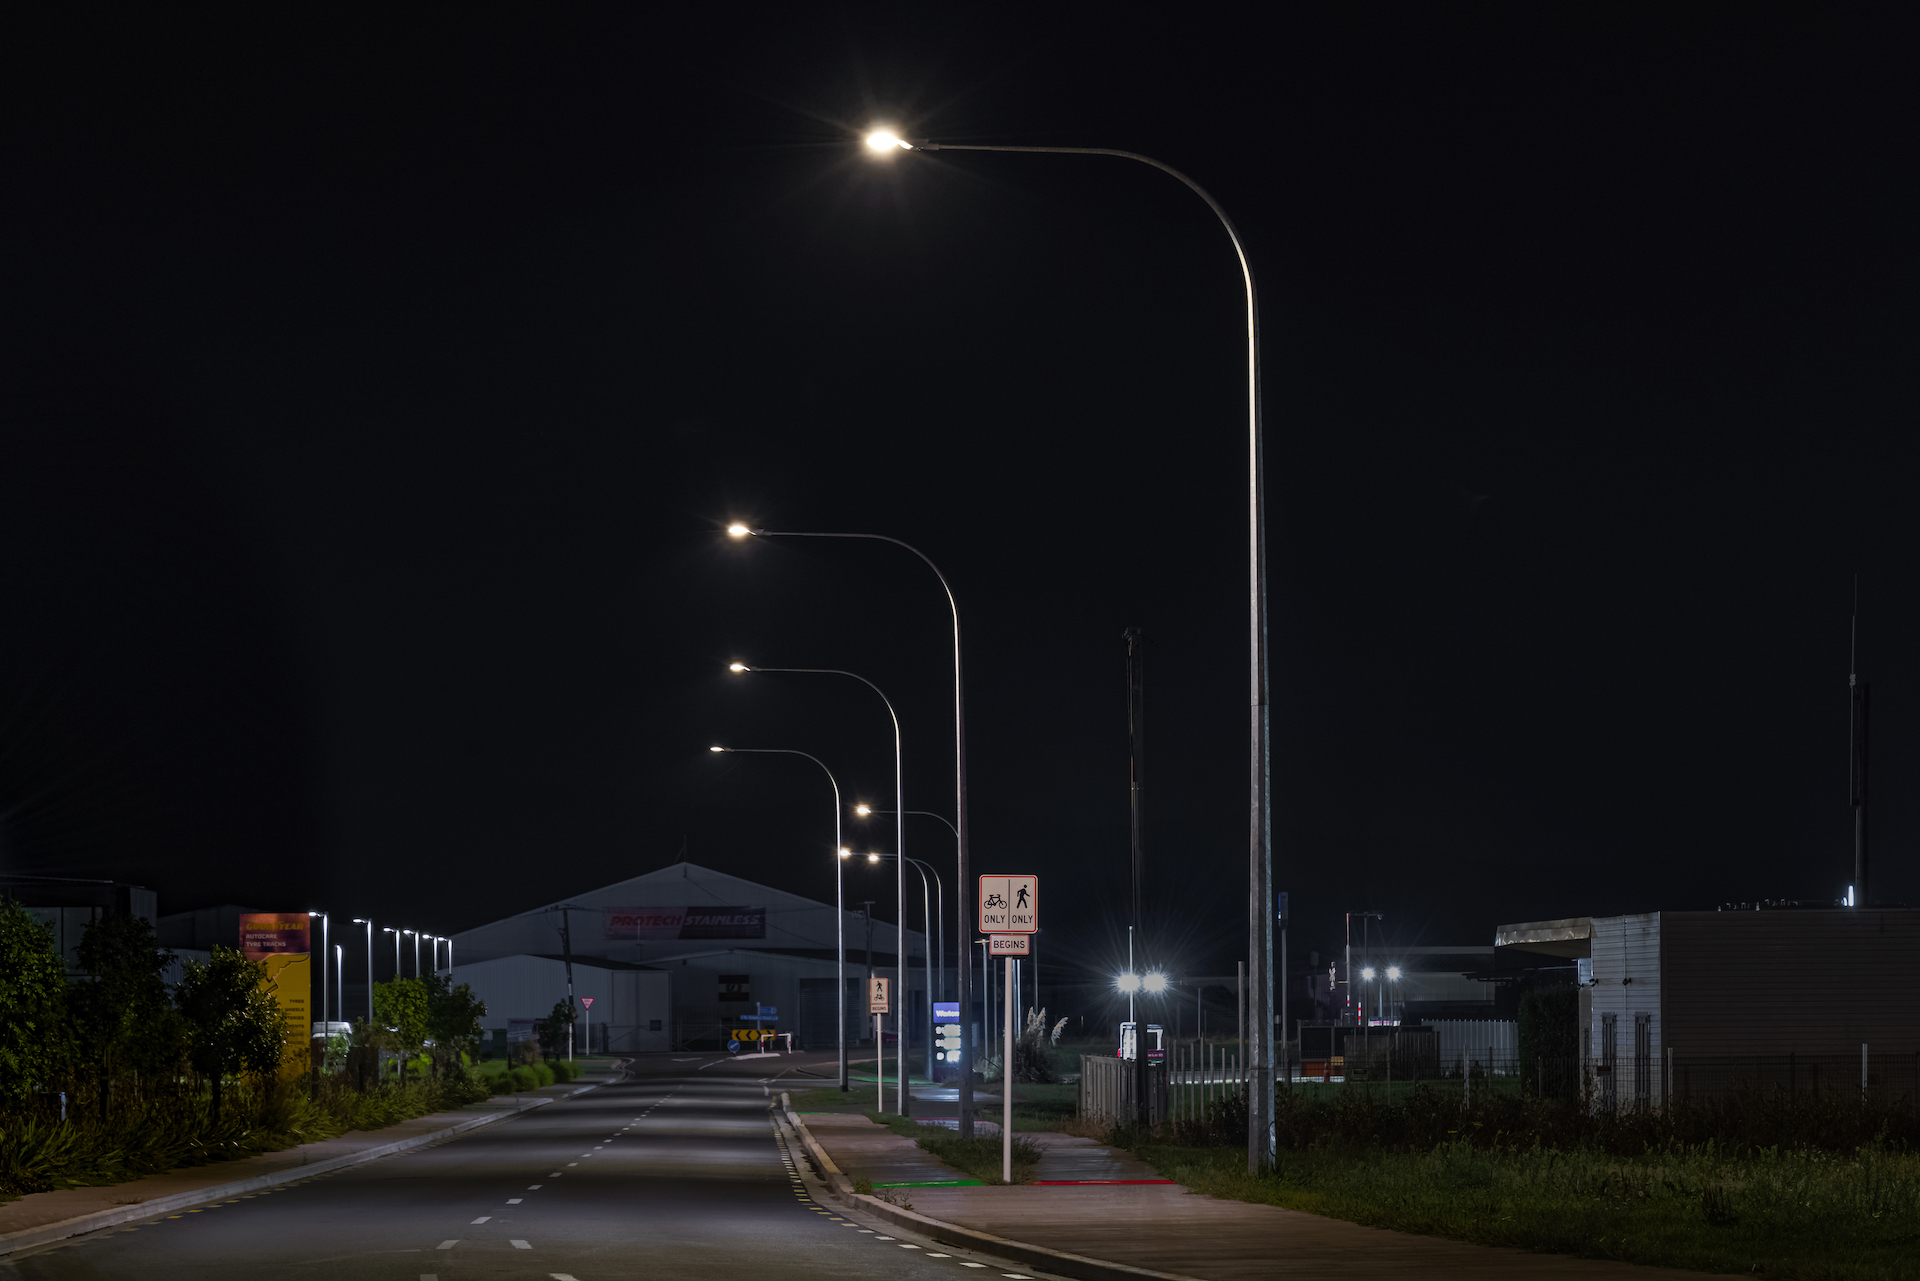 Te Rapa Gateway road at night illuminated by ibex lighting solutions.